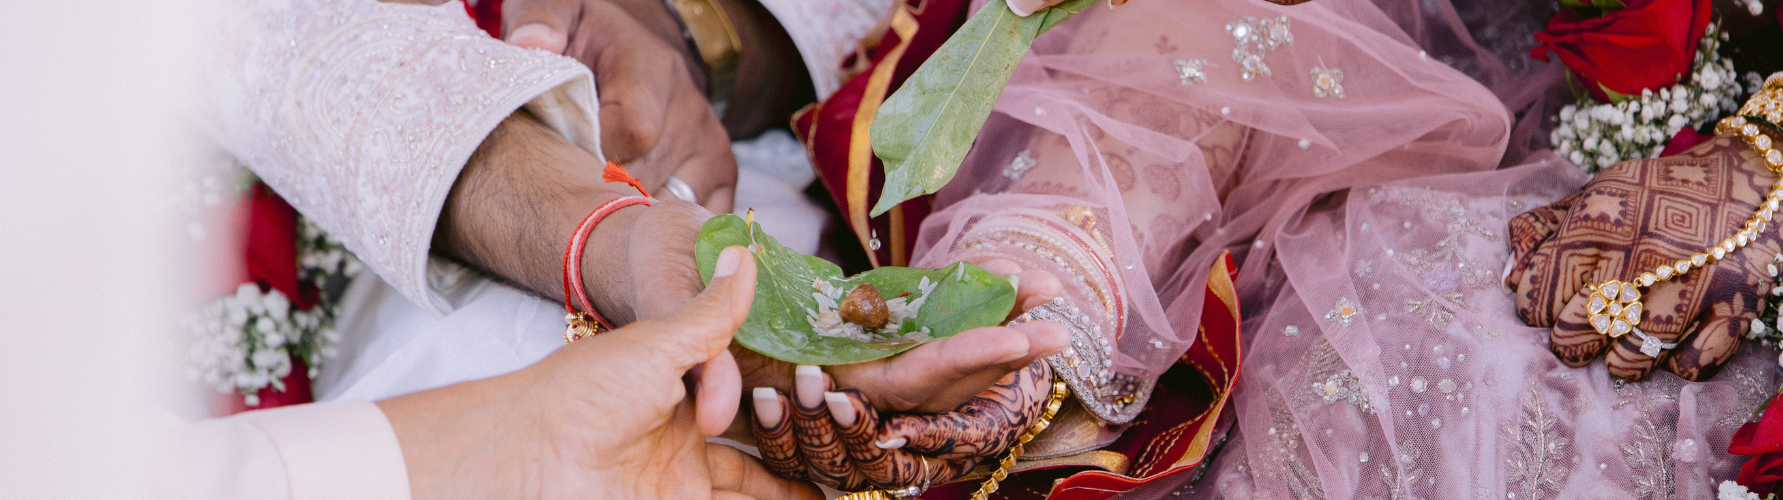 Close-up of gentle hands cradling a vibrant green leaf